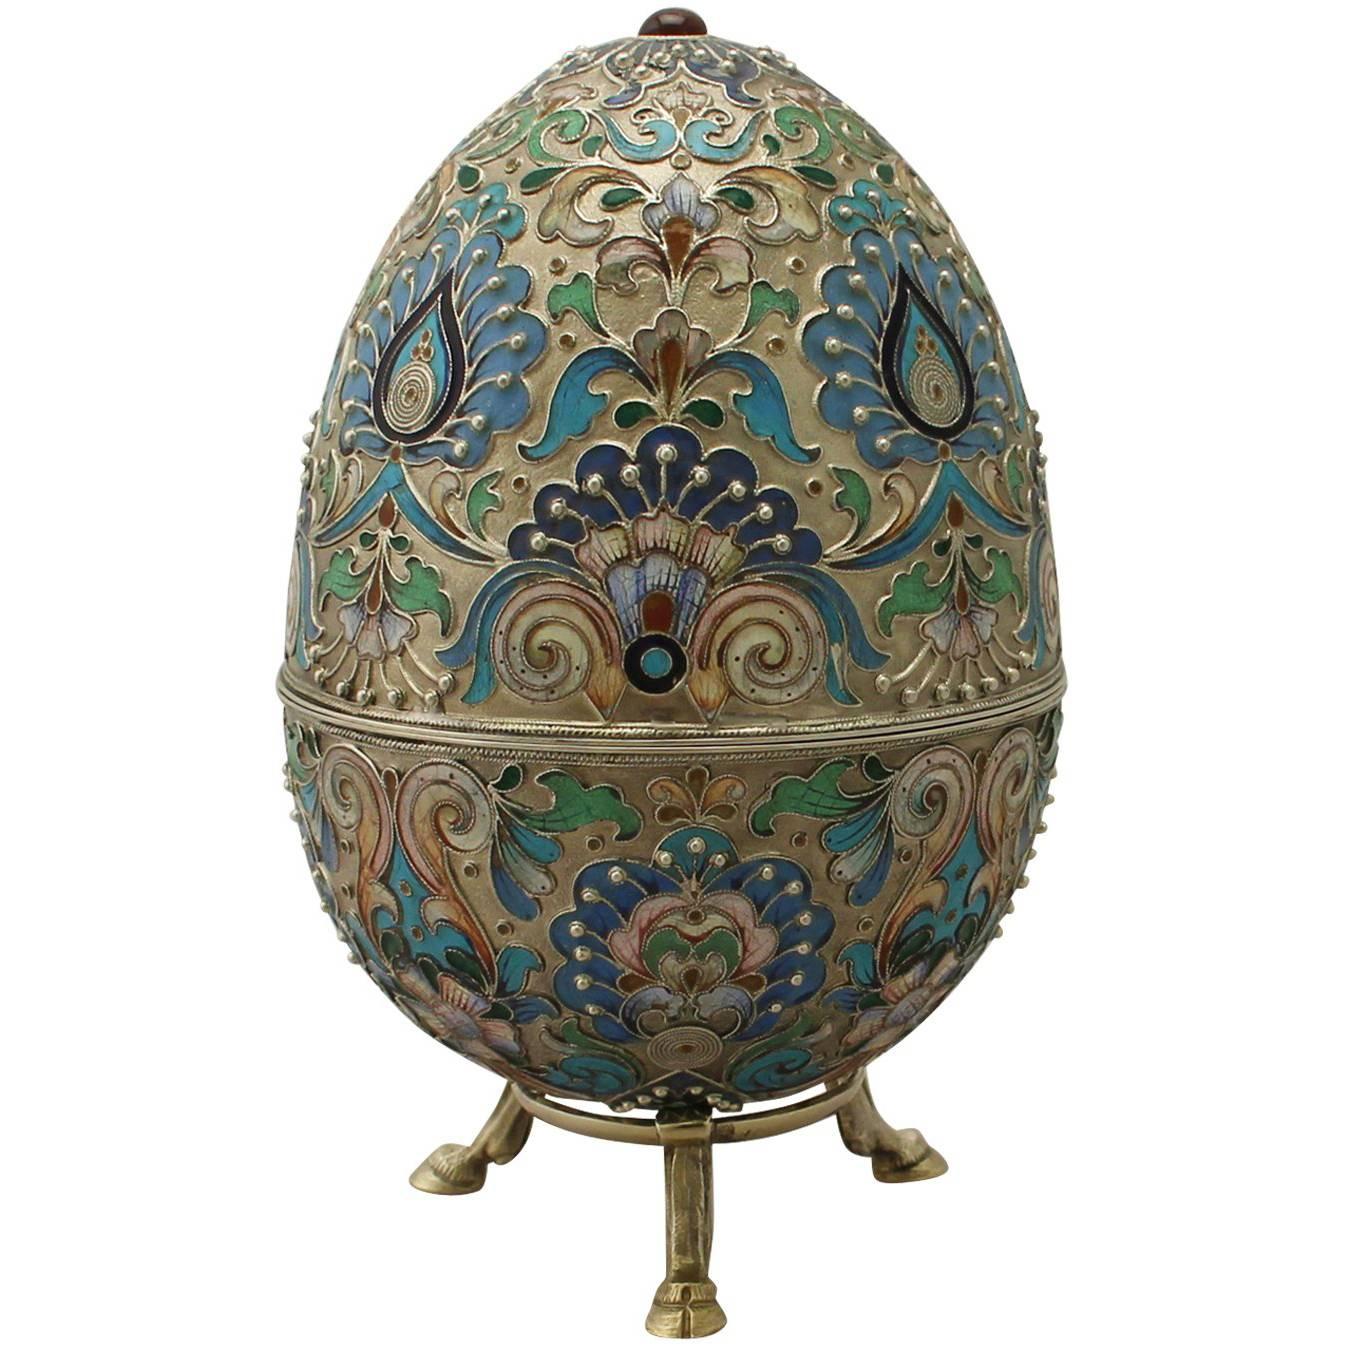 Antique Russian Silver Gilt and Polychrome Cloisonné Enamel Egg